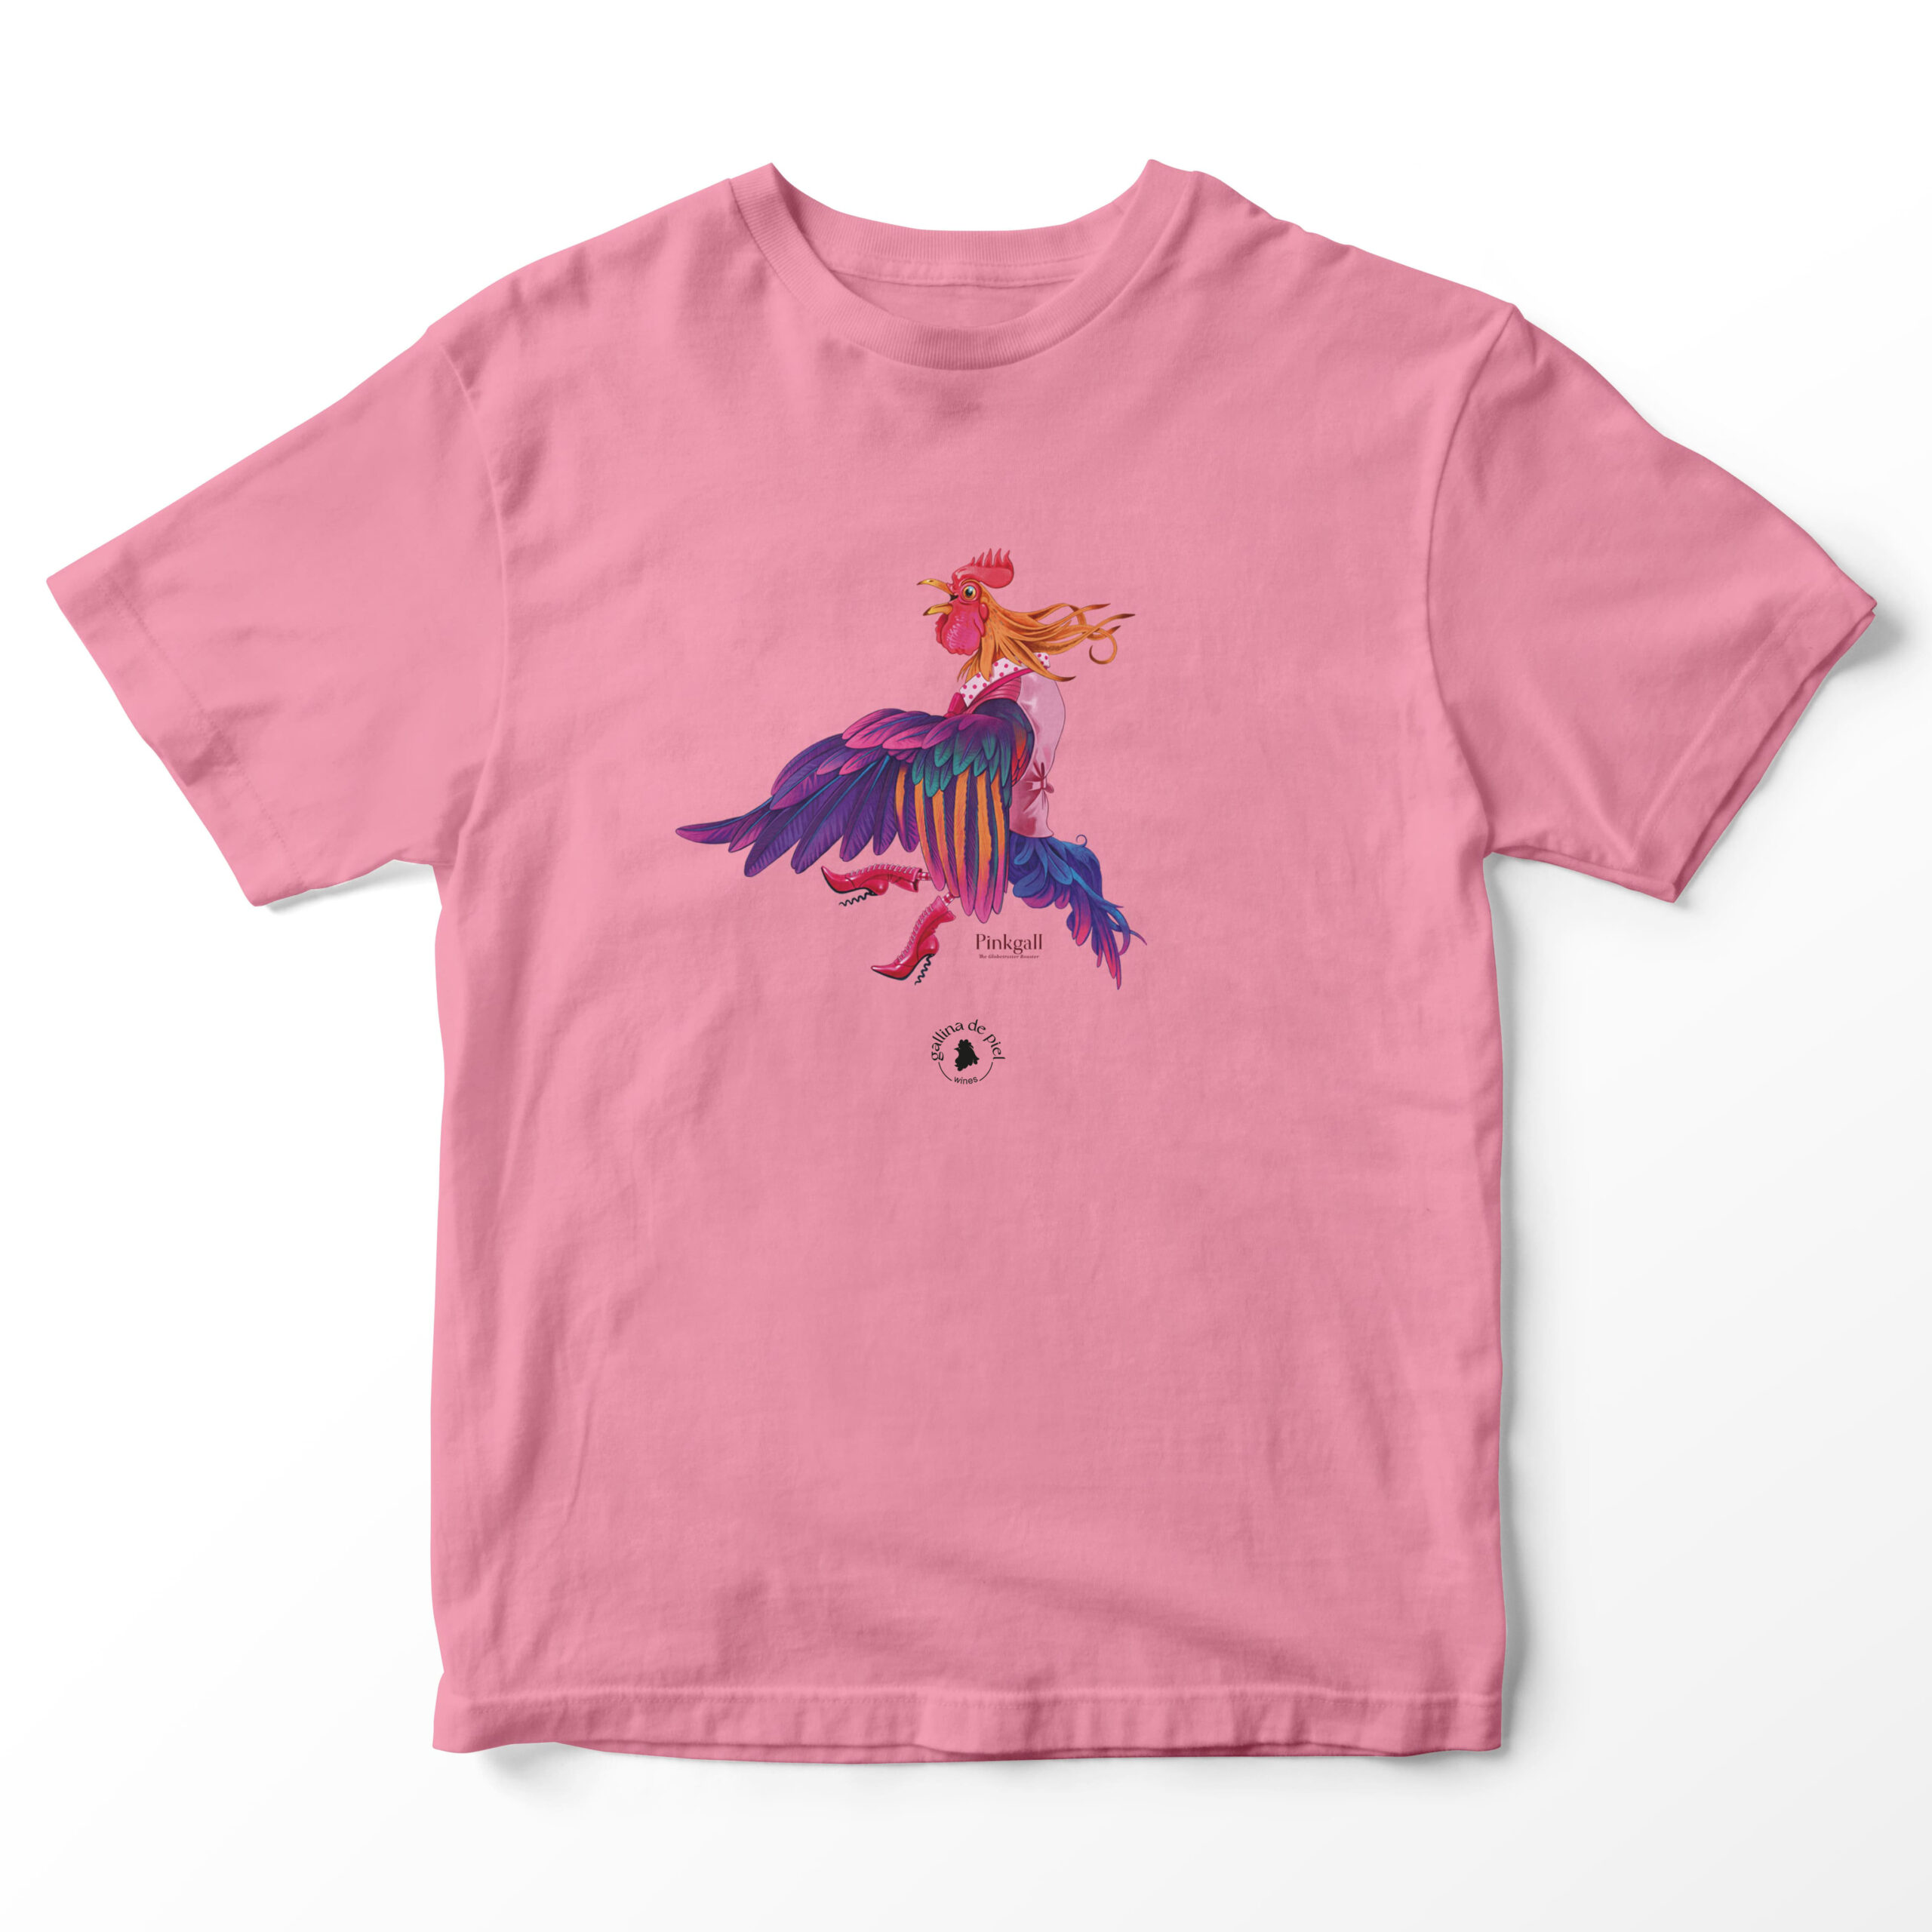 pinkgall shirt